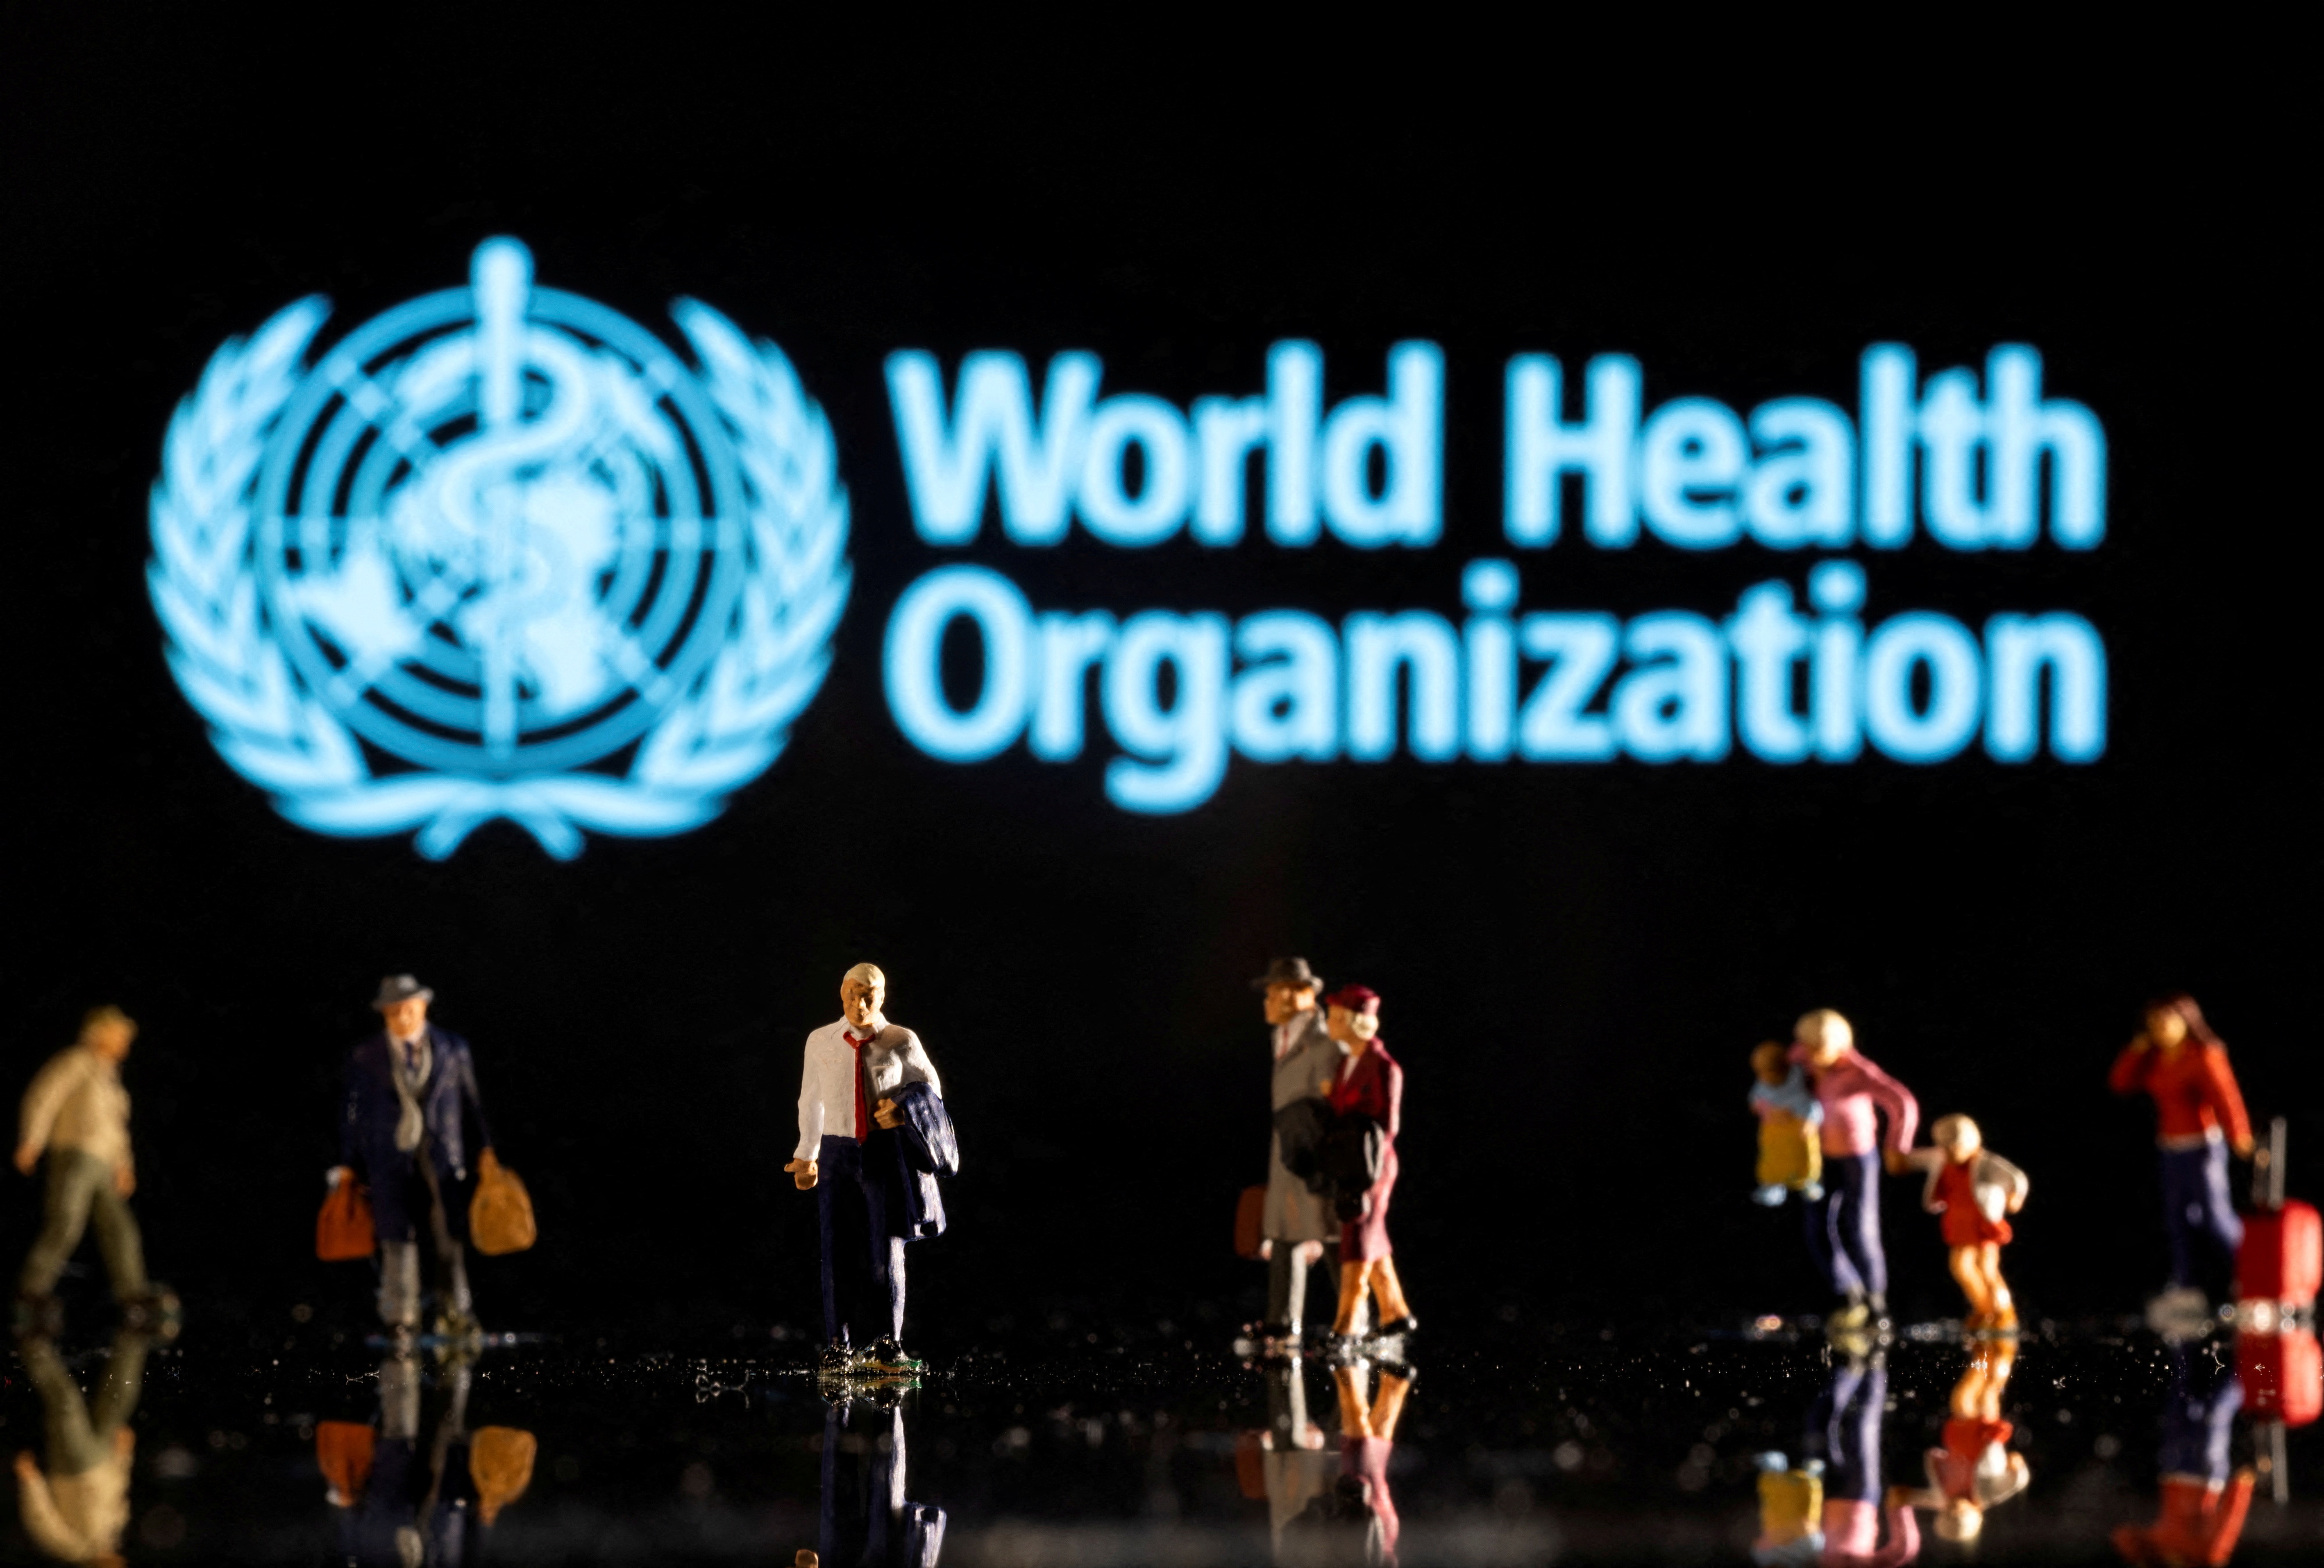 Illustration shows small figurines and displayed World Health Organization logo